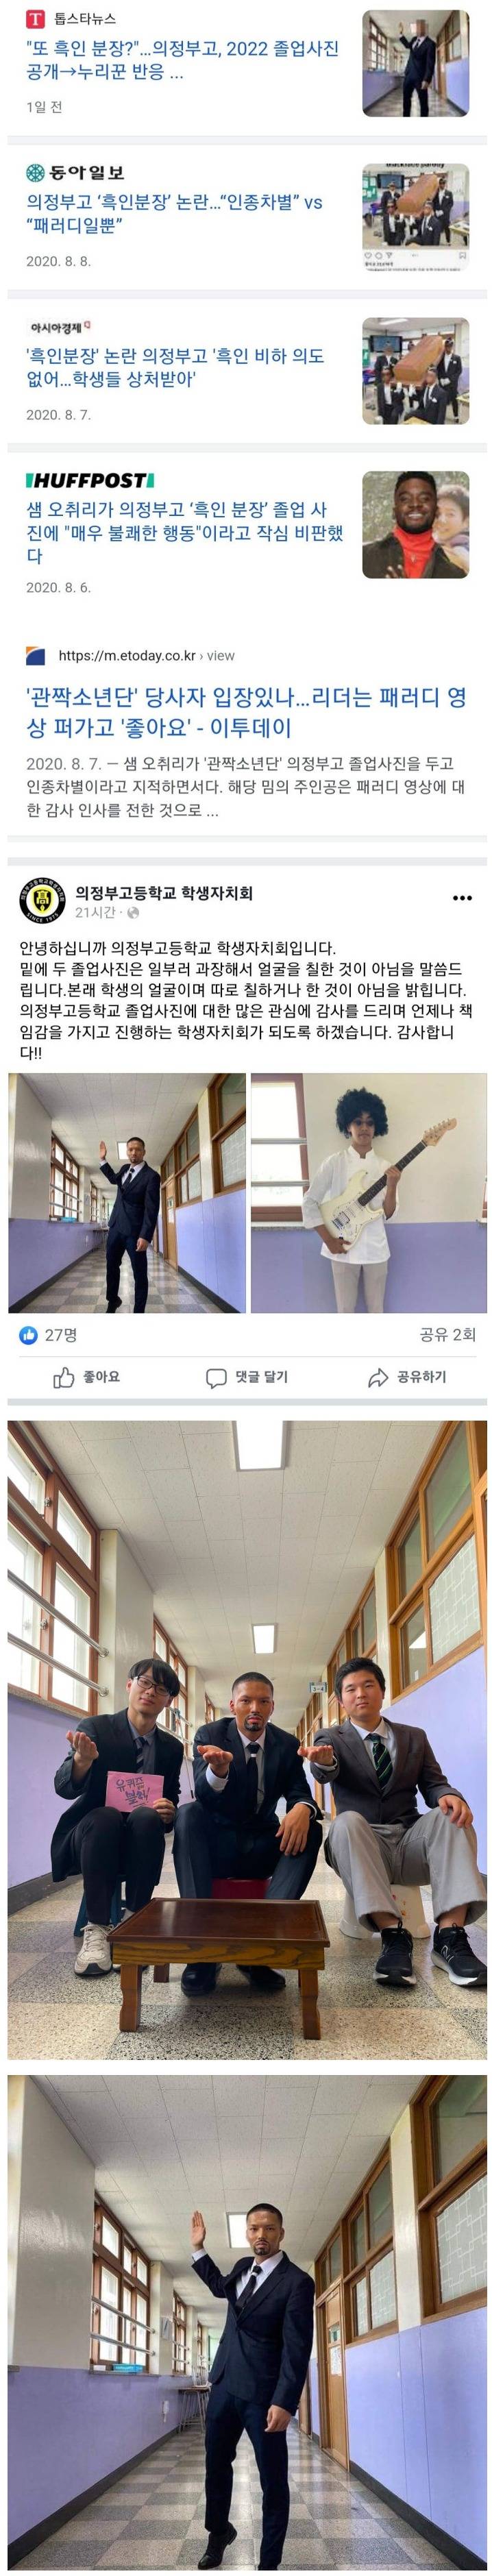 Uijeongbu High School has a similar attack